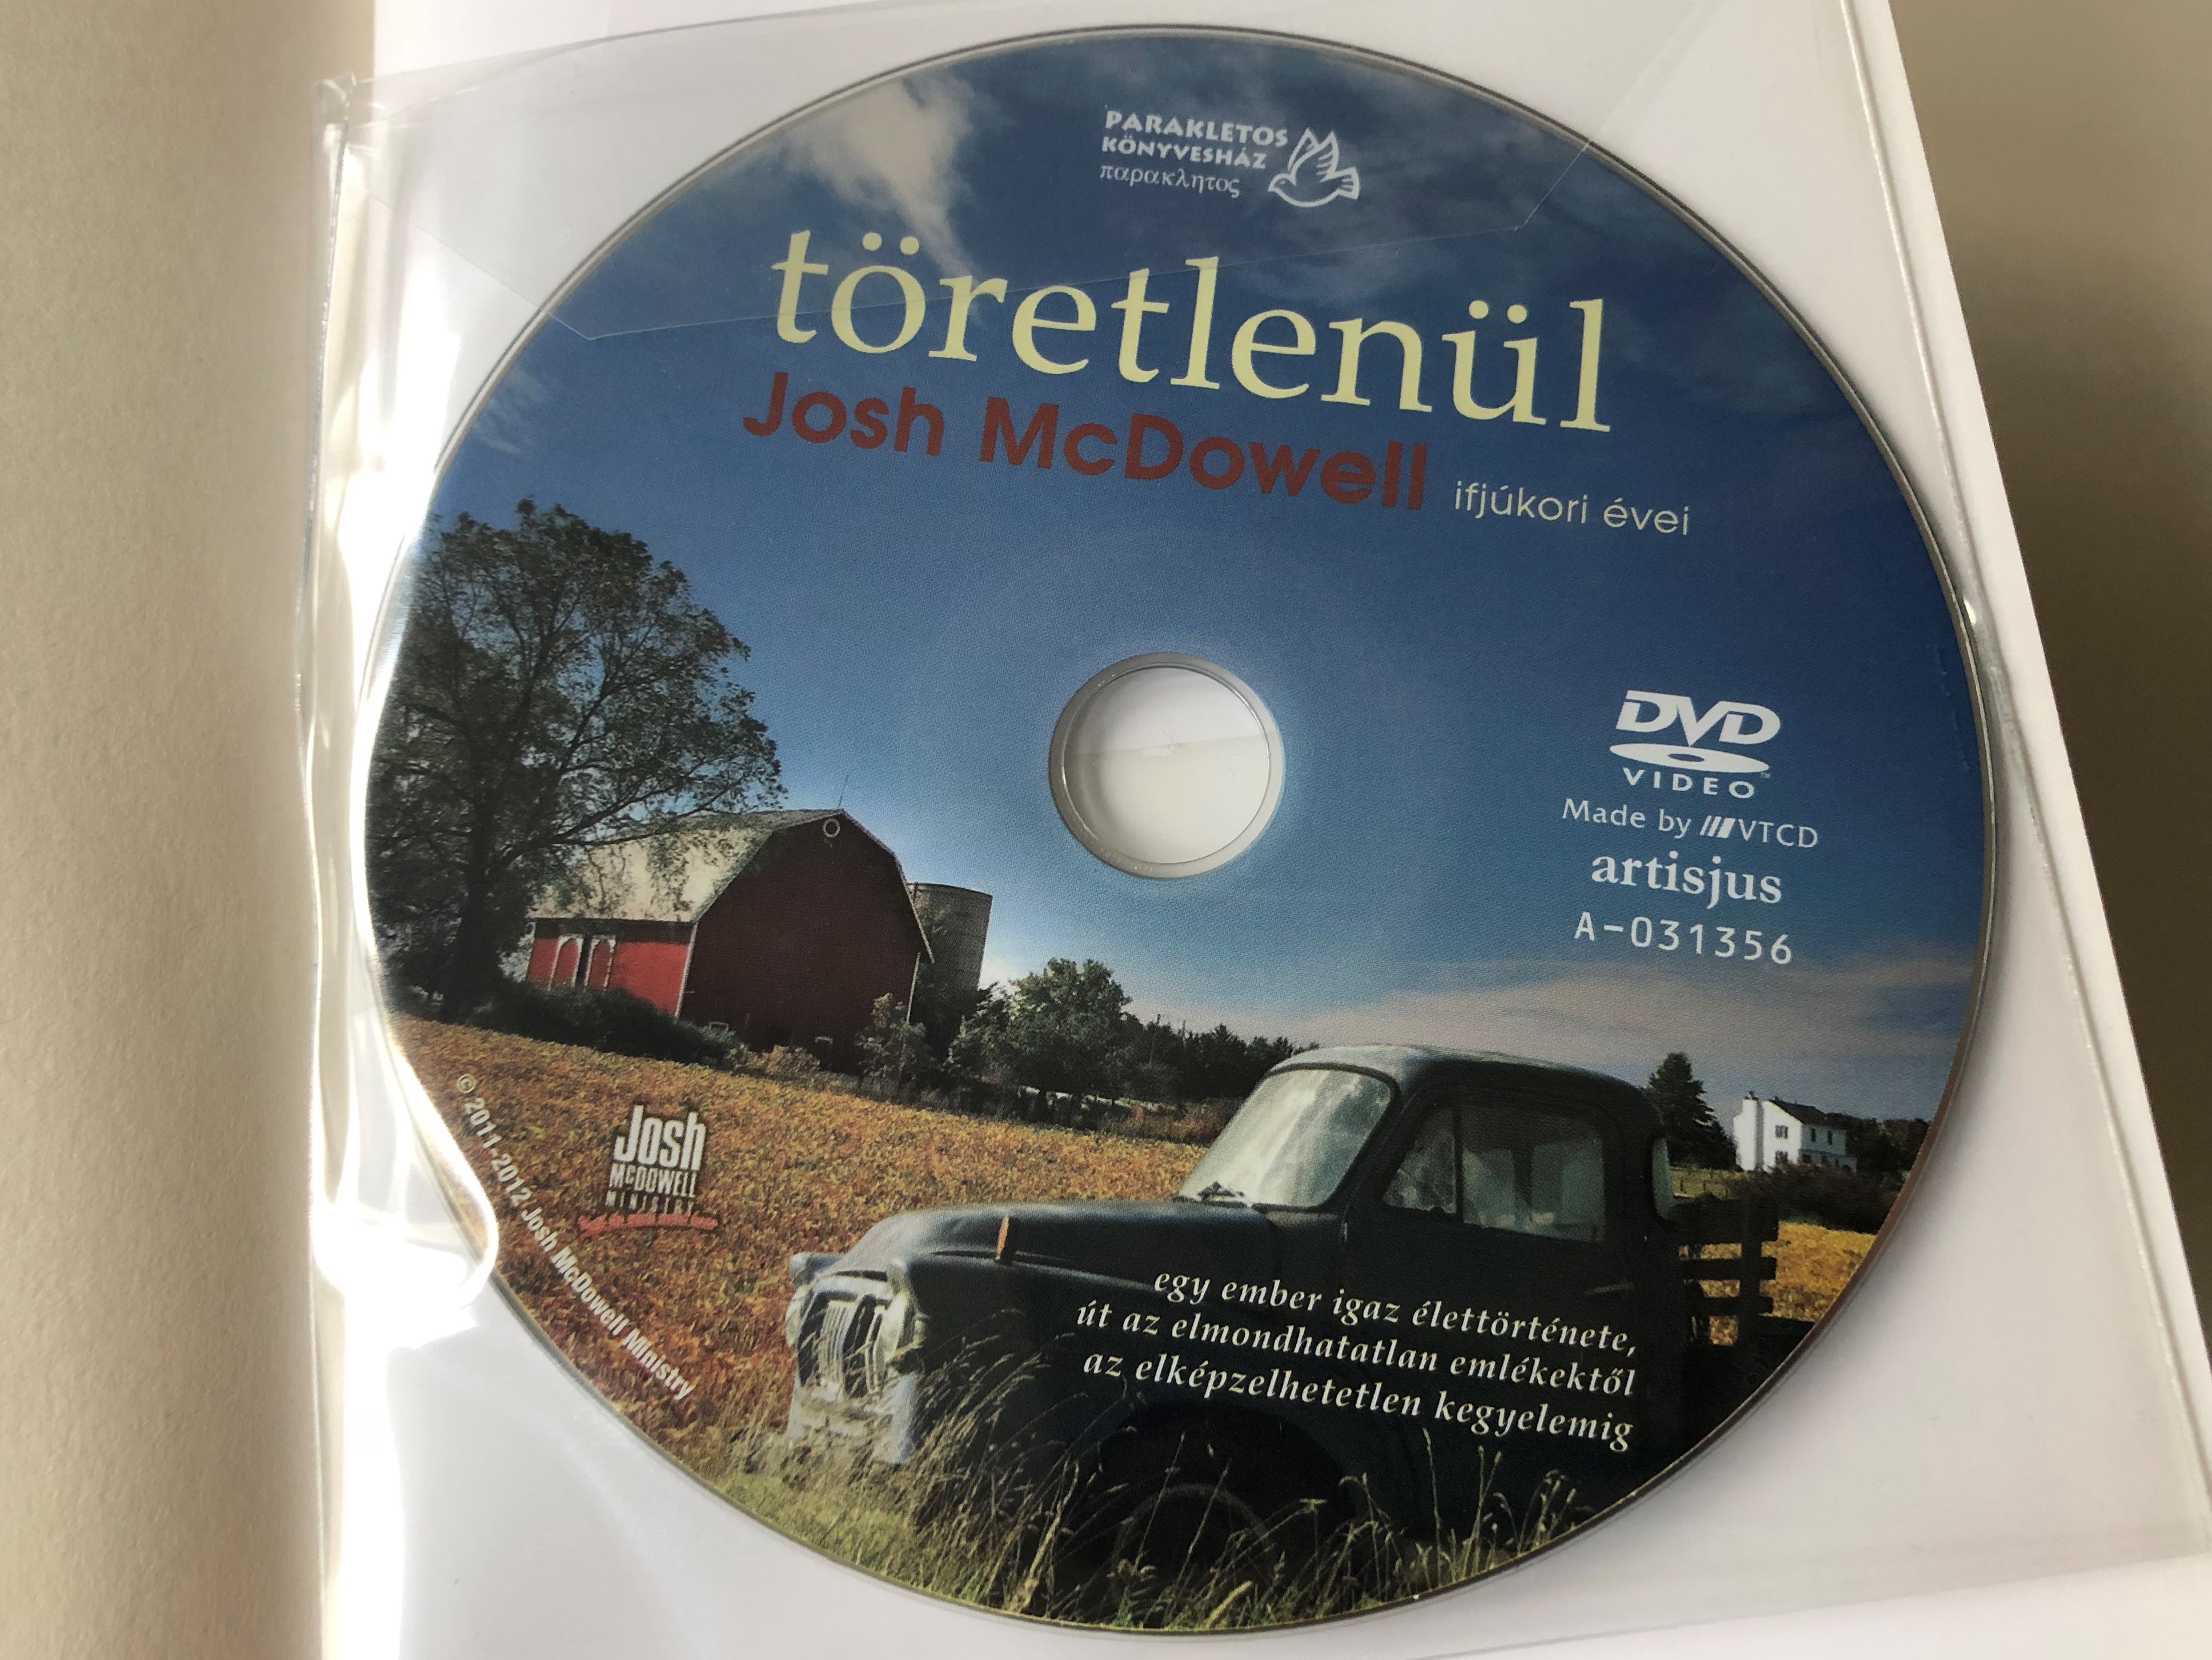 t-retlen-l-dvd-mell-klettel-undounted-in-hungarian-language-with-dvd-included-josh-mcdowell-crist-bal-krusen-dvd-a-031356-paperback-parakletos-2013-10-.jpg